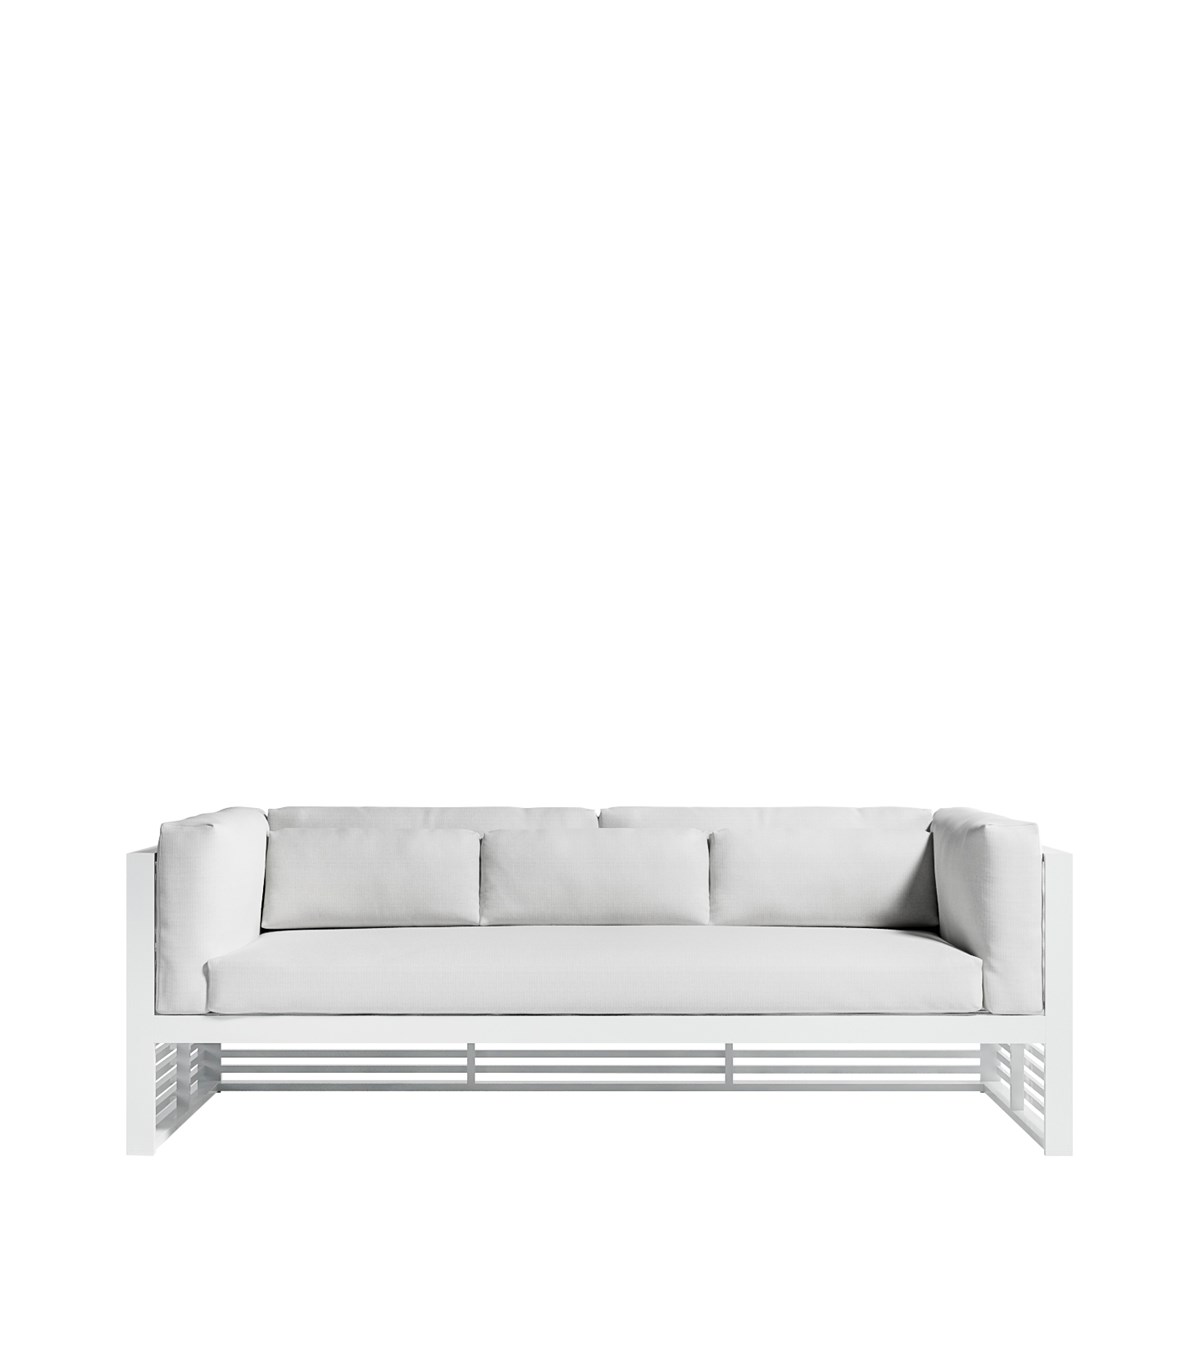 Dna 3 Seat Sofa White Product Image 1